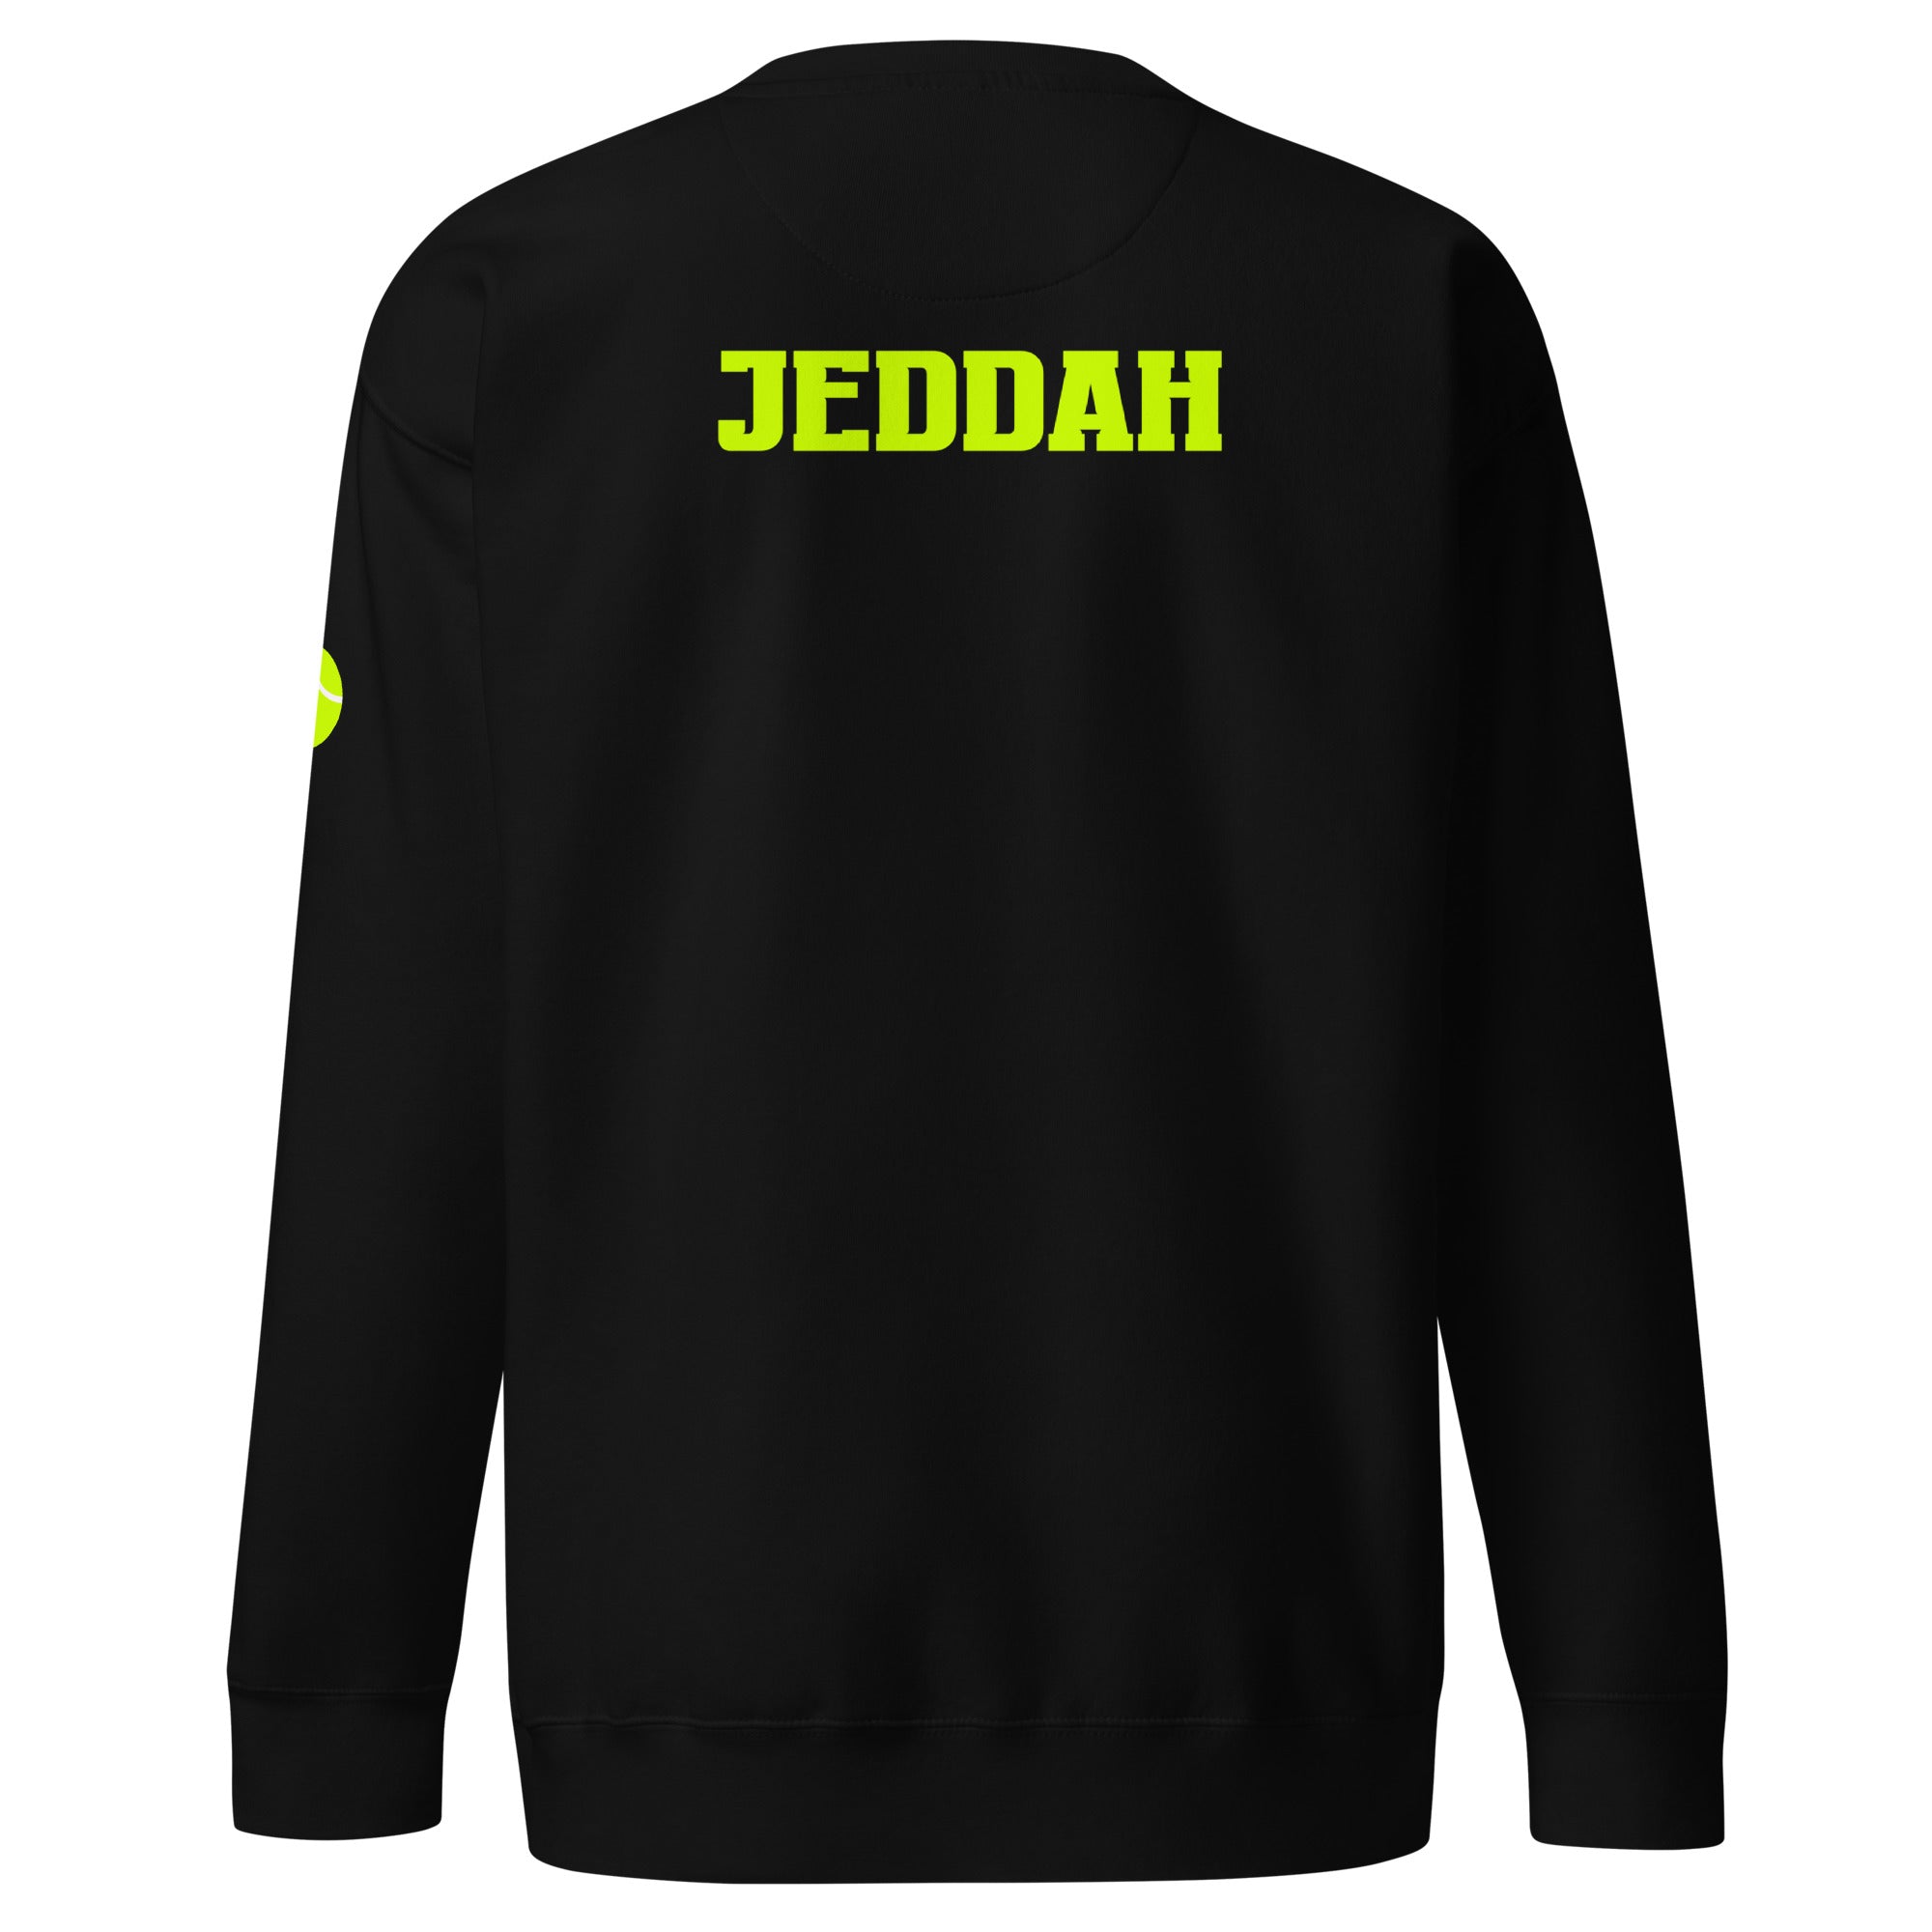 Unisex Premium Sweatshirt - Tennis Masters Jeddah - GRAPHIC T-SHIRTS